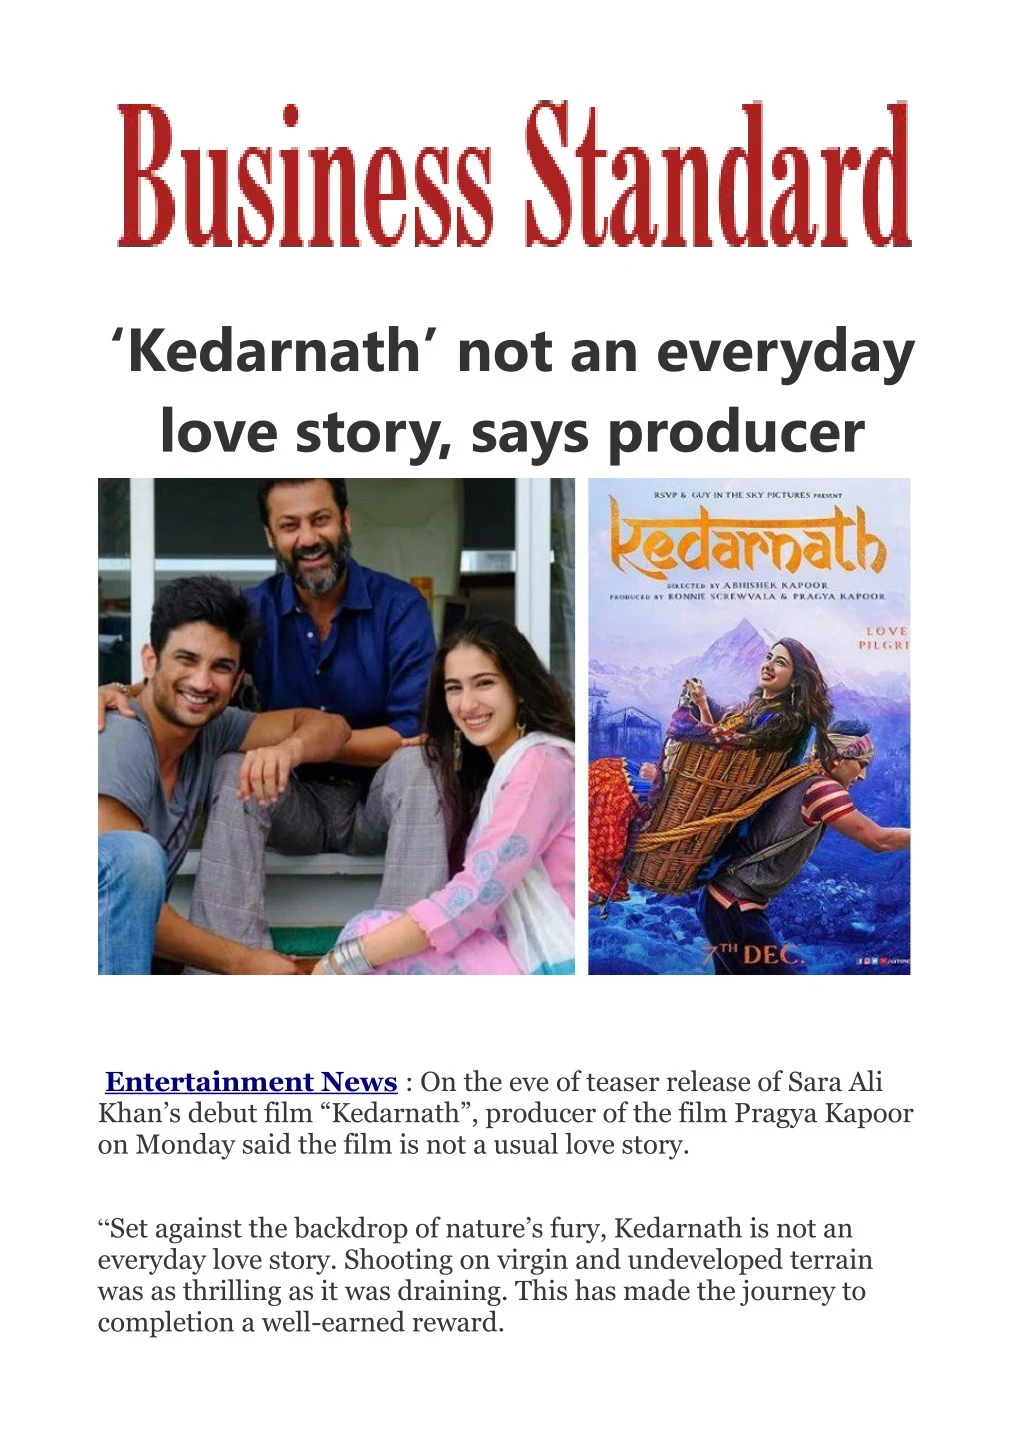 kedarnath not an everyday love story says producer